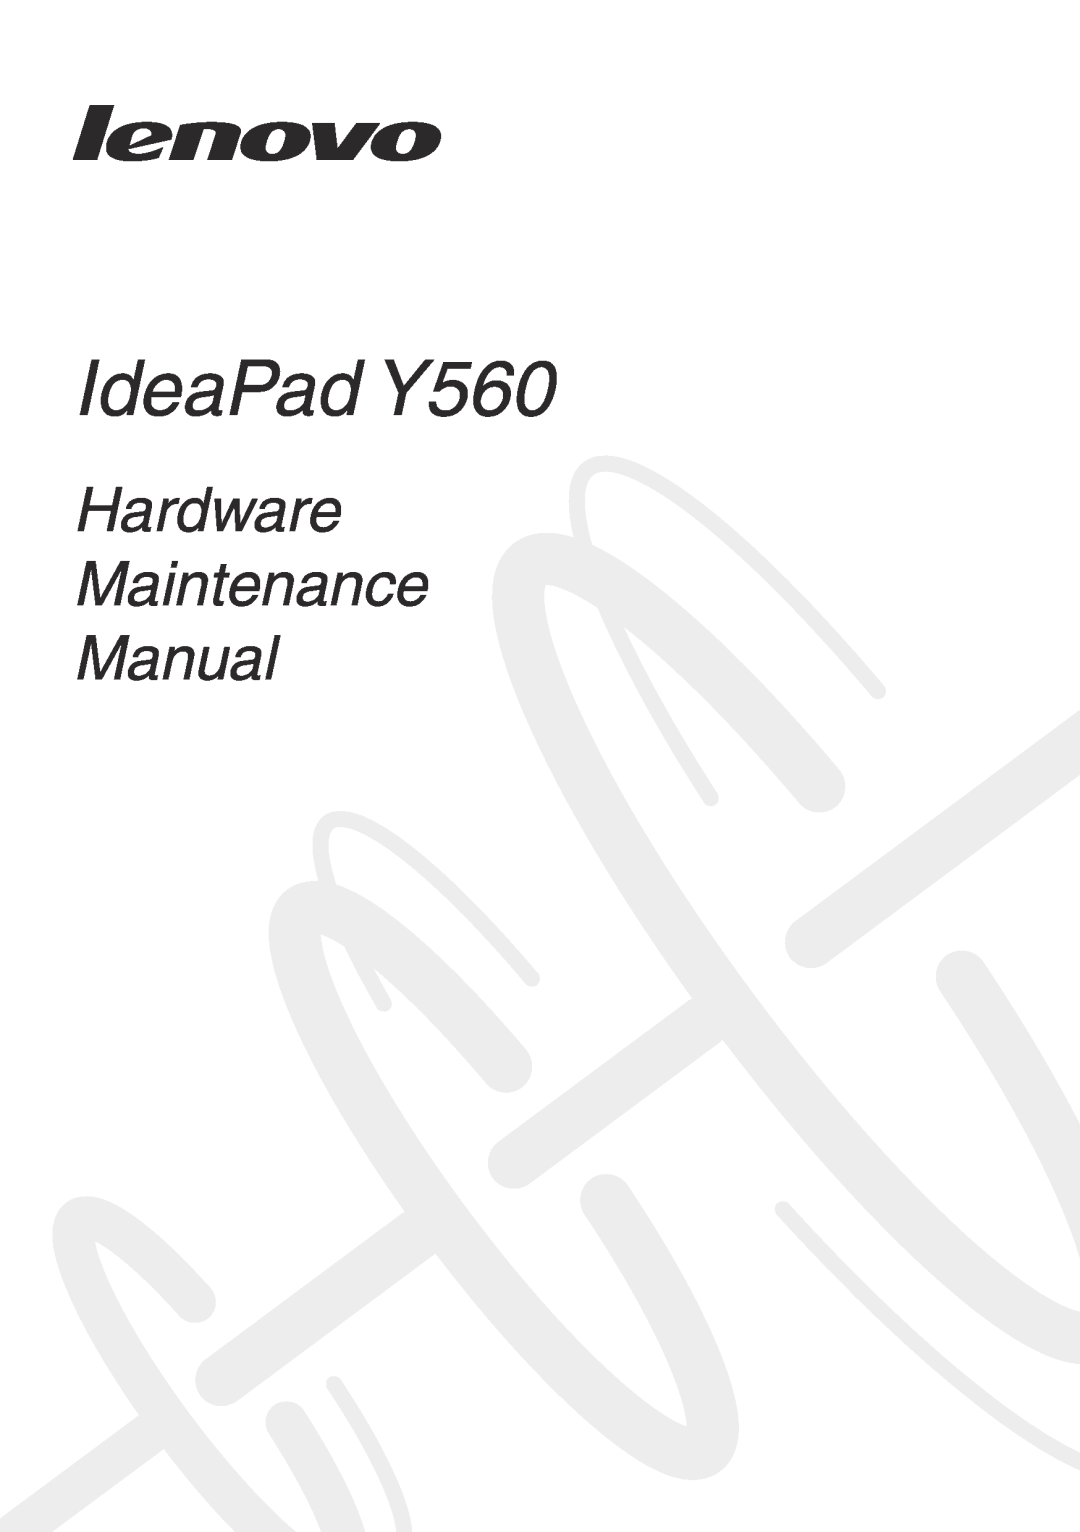 Lenovo manual IdeaPad Y560, Hardware Maintenance Manual 